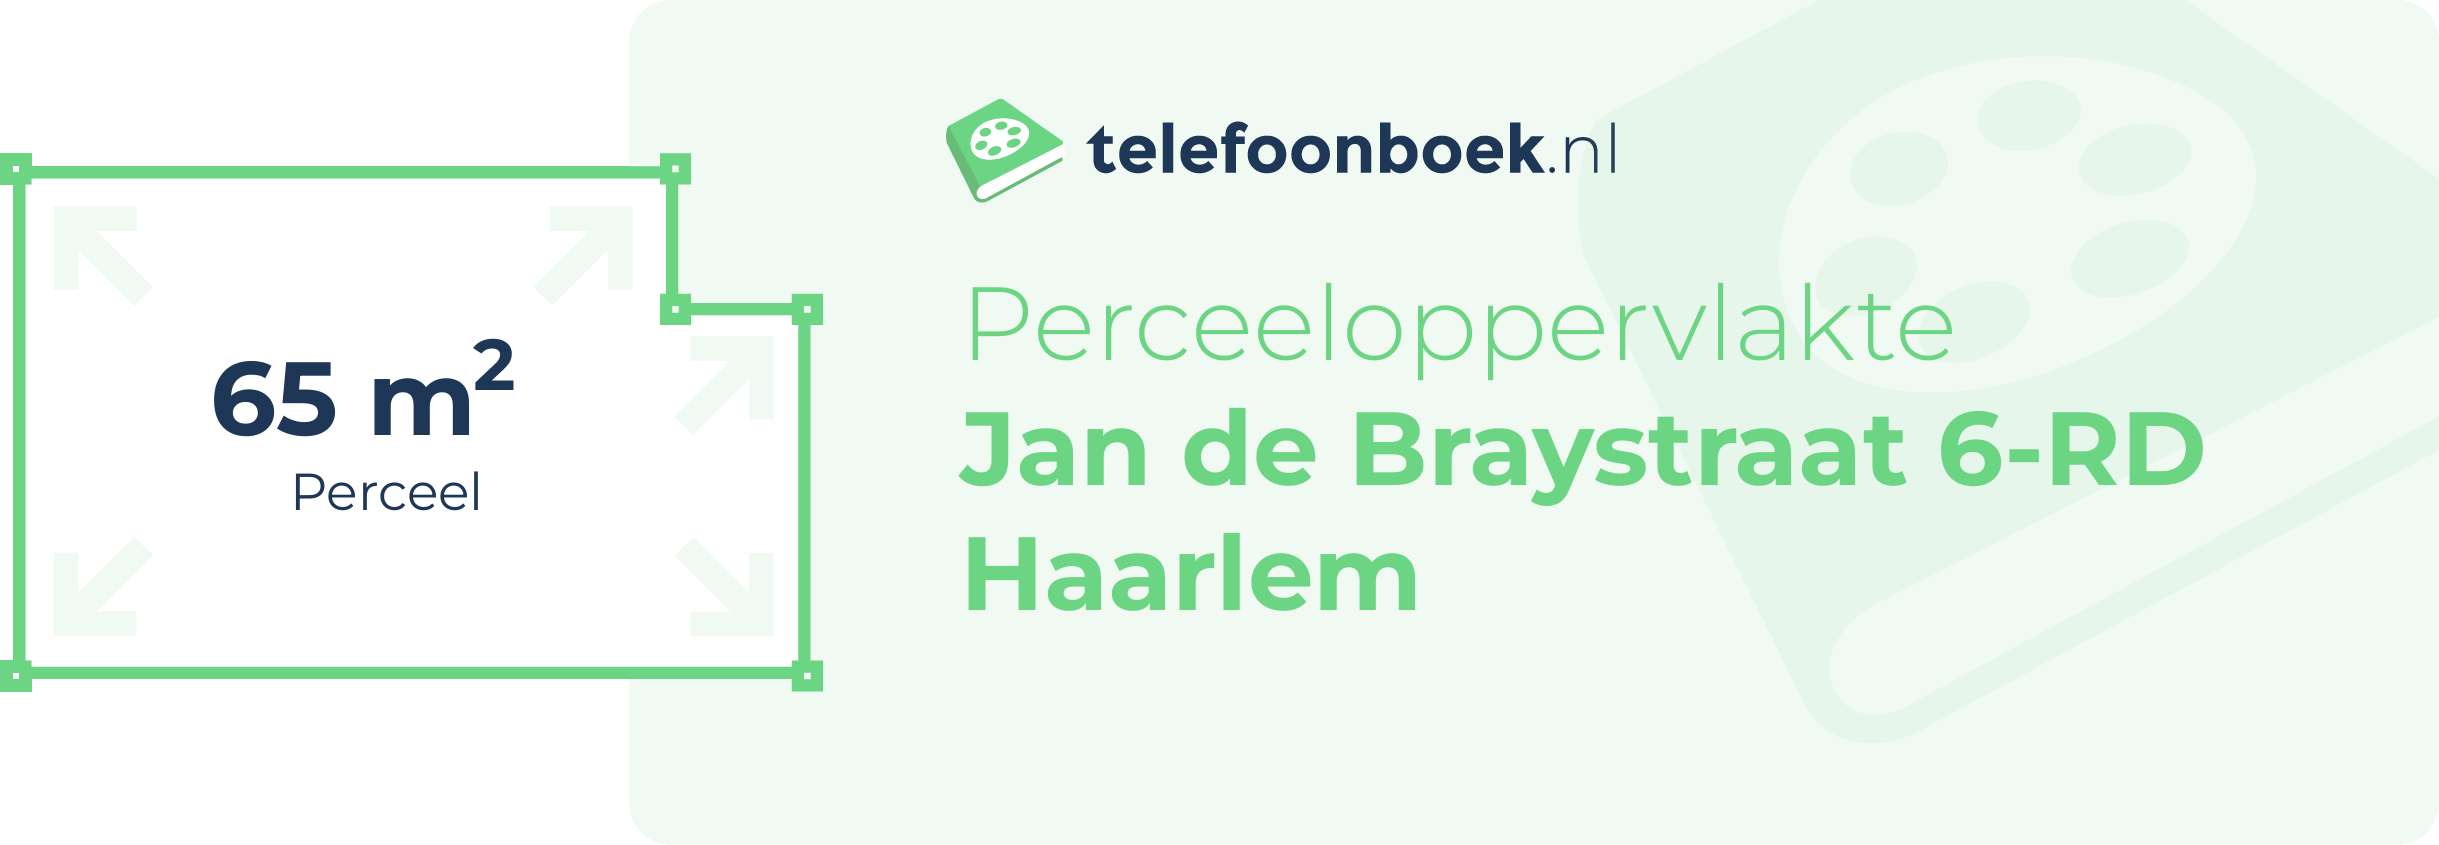 Perceeloppervlakte Jan De Braystraat 6-RD Haarlem